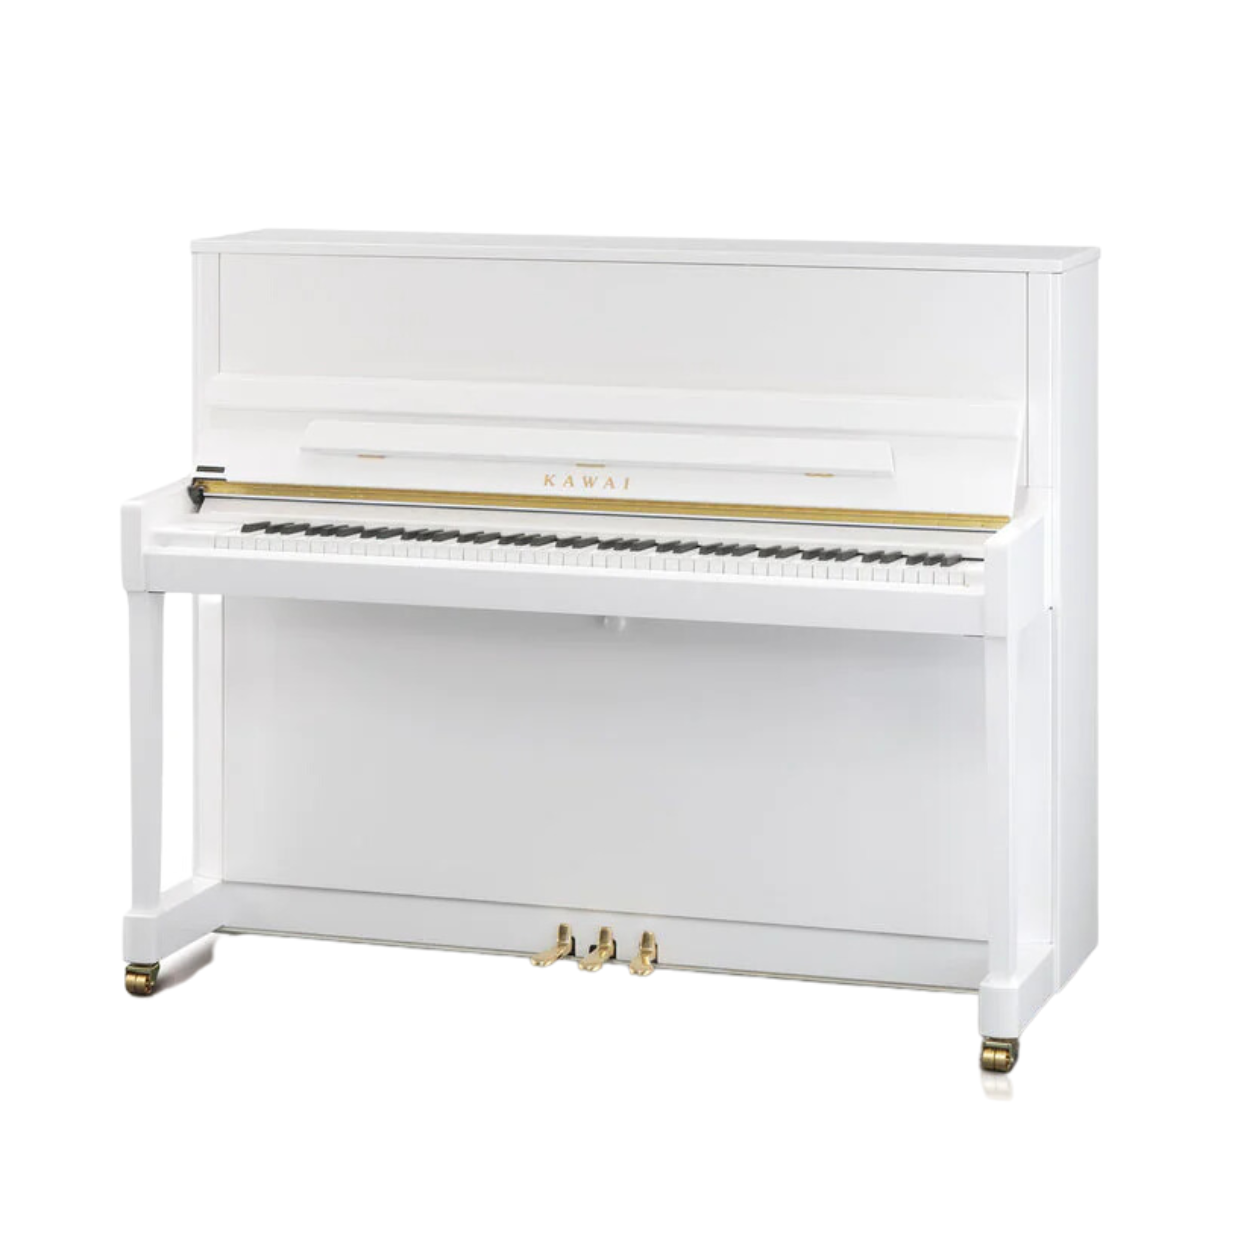 Kawai K-300 [Made in Indonesia] Professional Acoustic Upright Piano - White Polish